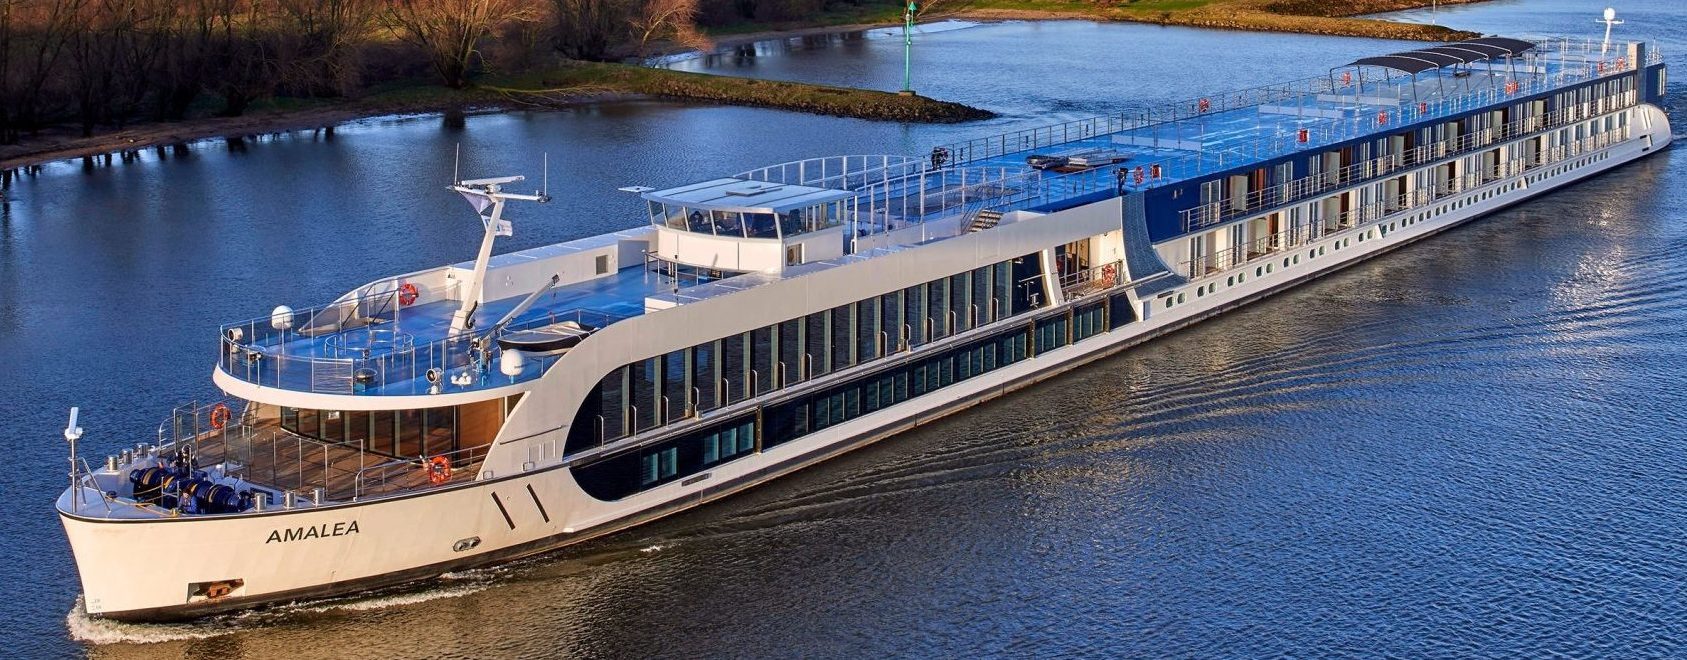 short river cruise budapest